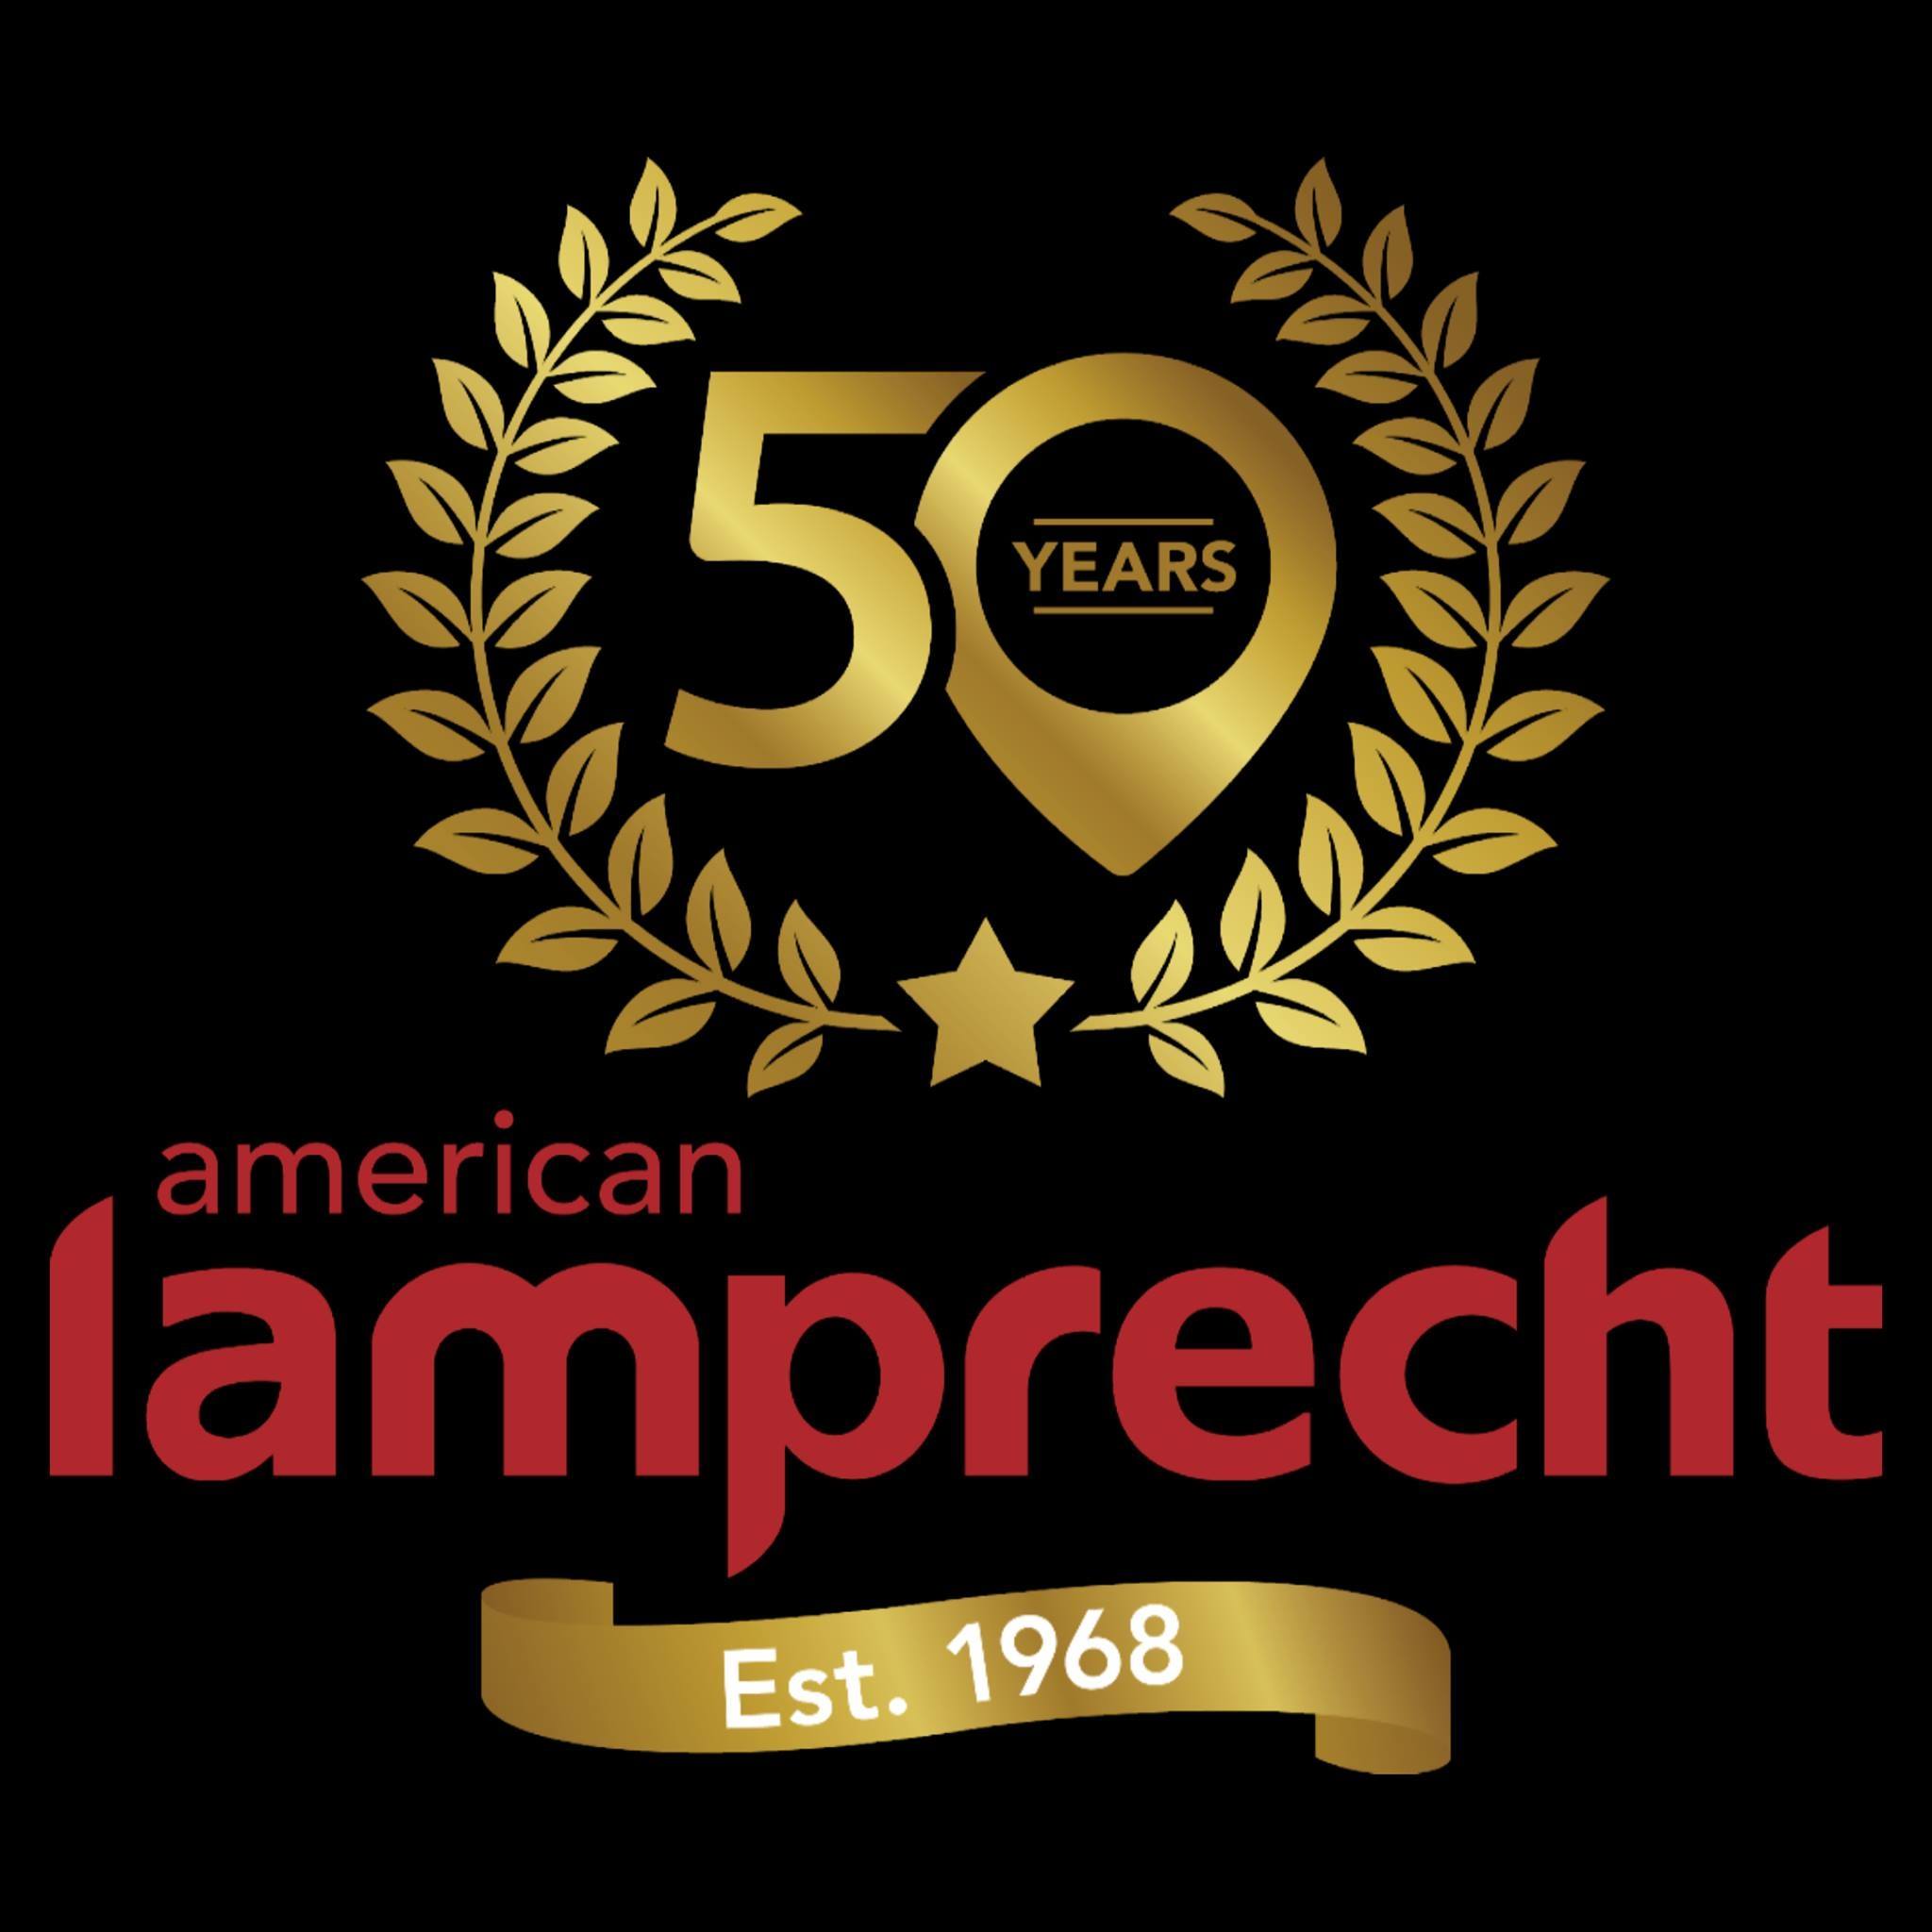 American Lamprecht Transport